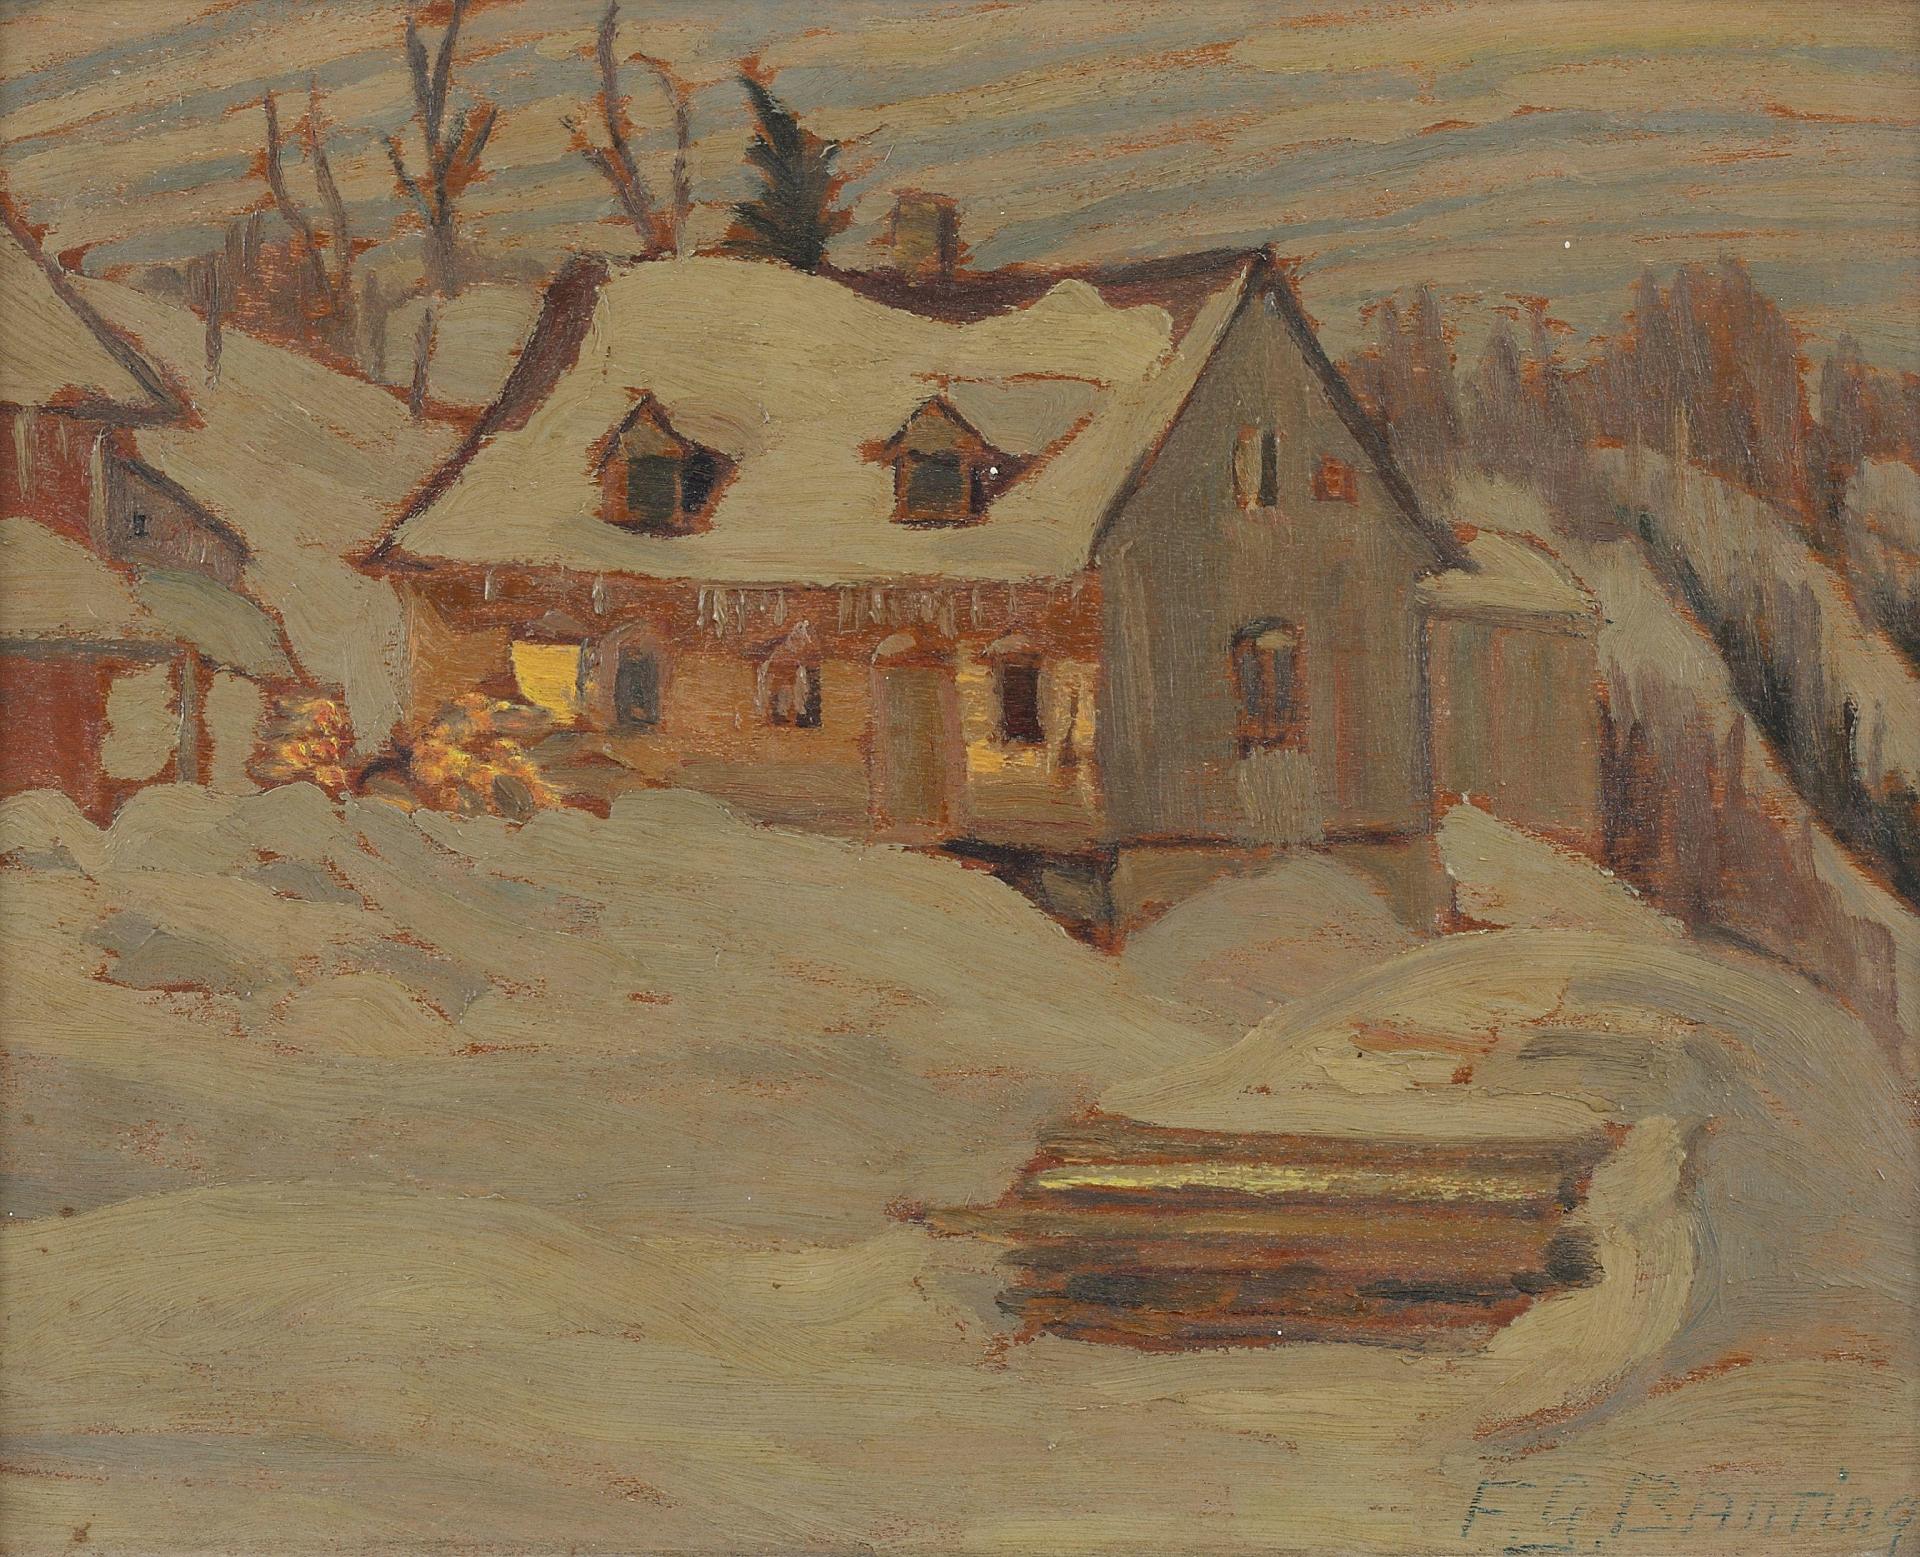 Sir Frederick Grant Banting (1891-1941) - Farm in winter